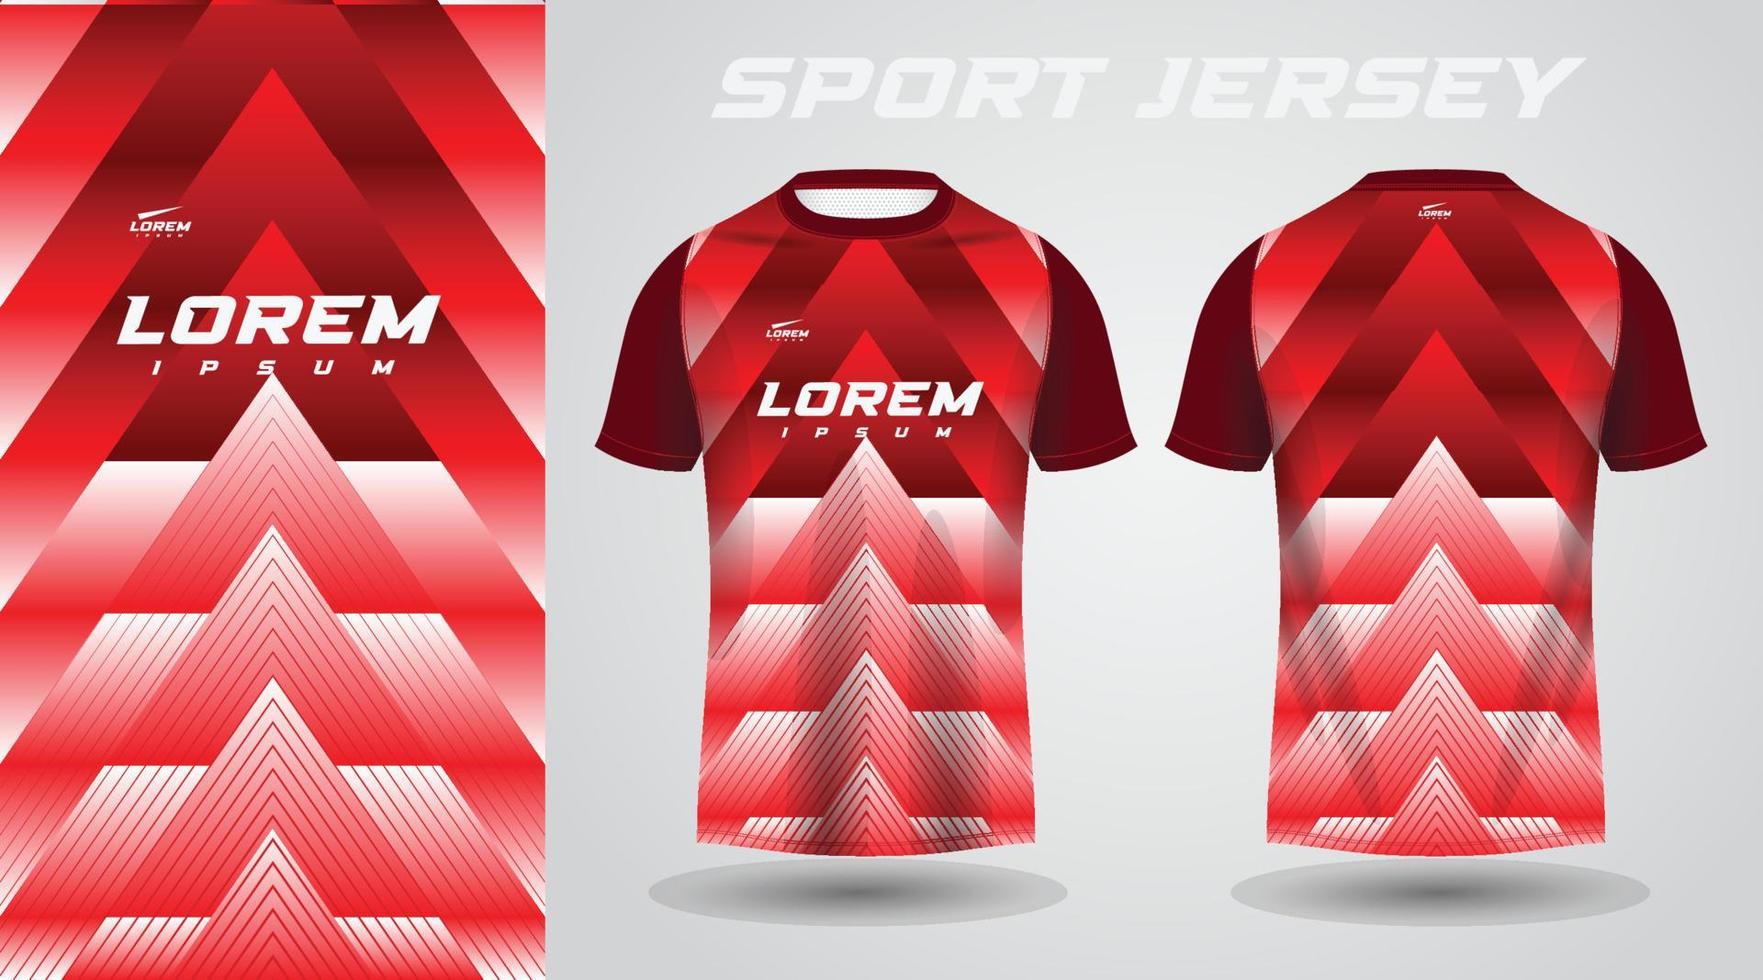 red white shirt sport jersey design vector